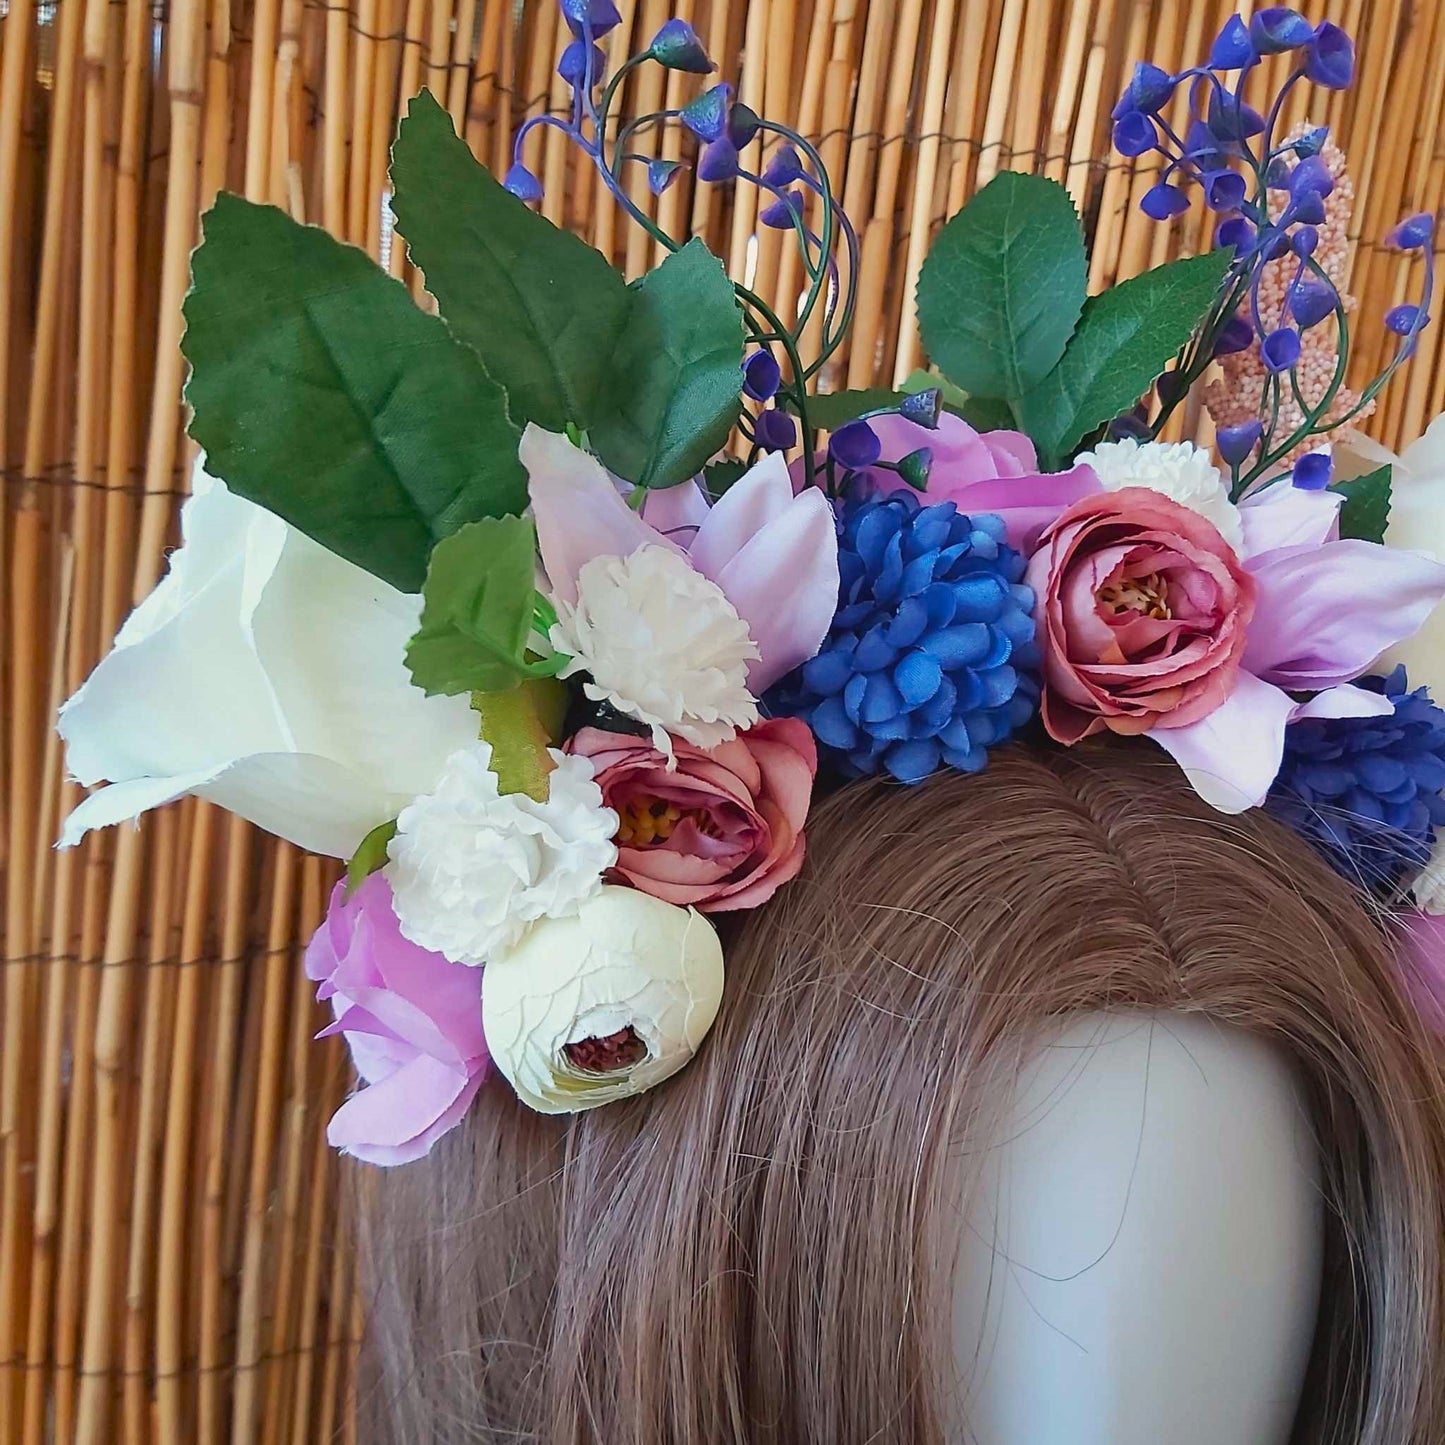 Luxury Handmade Purple Flower Headband/Headpiece